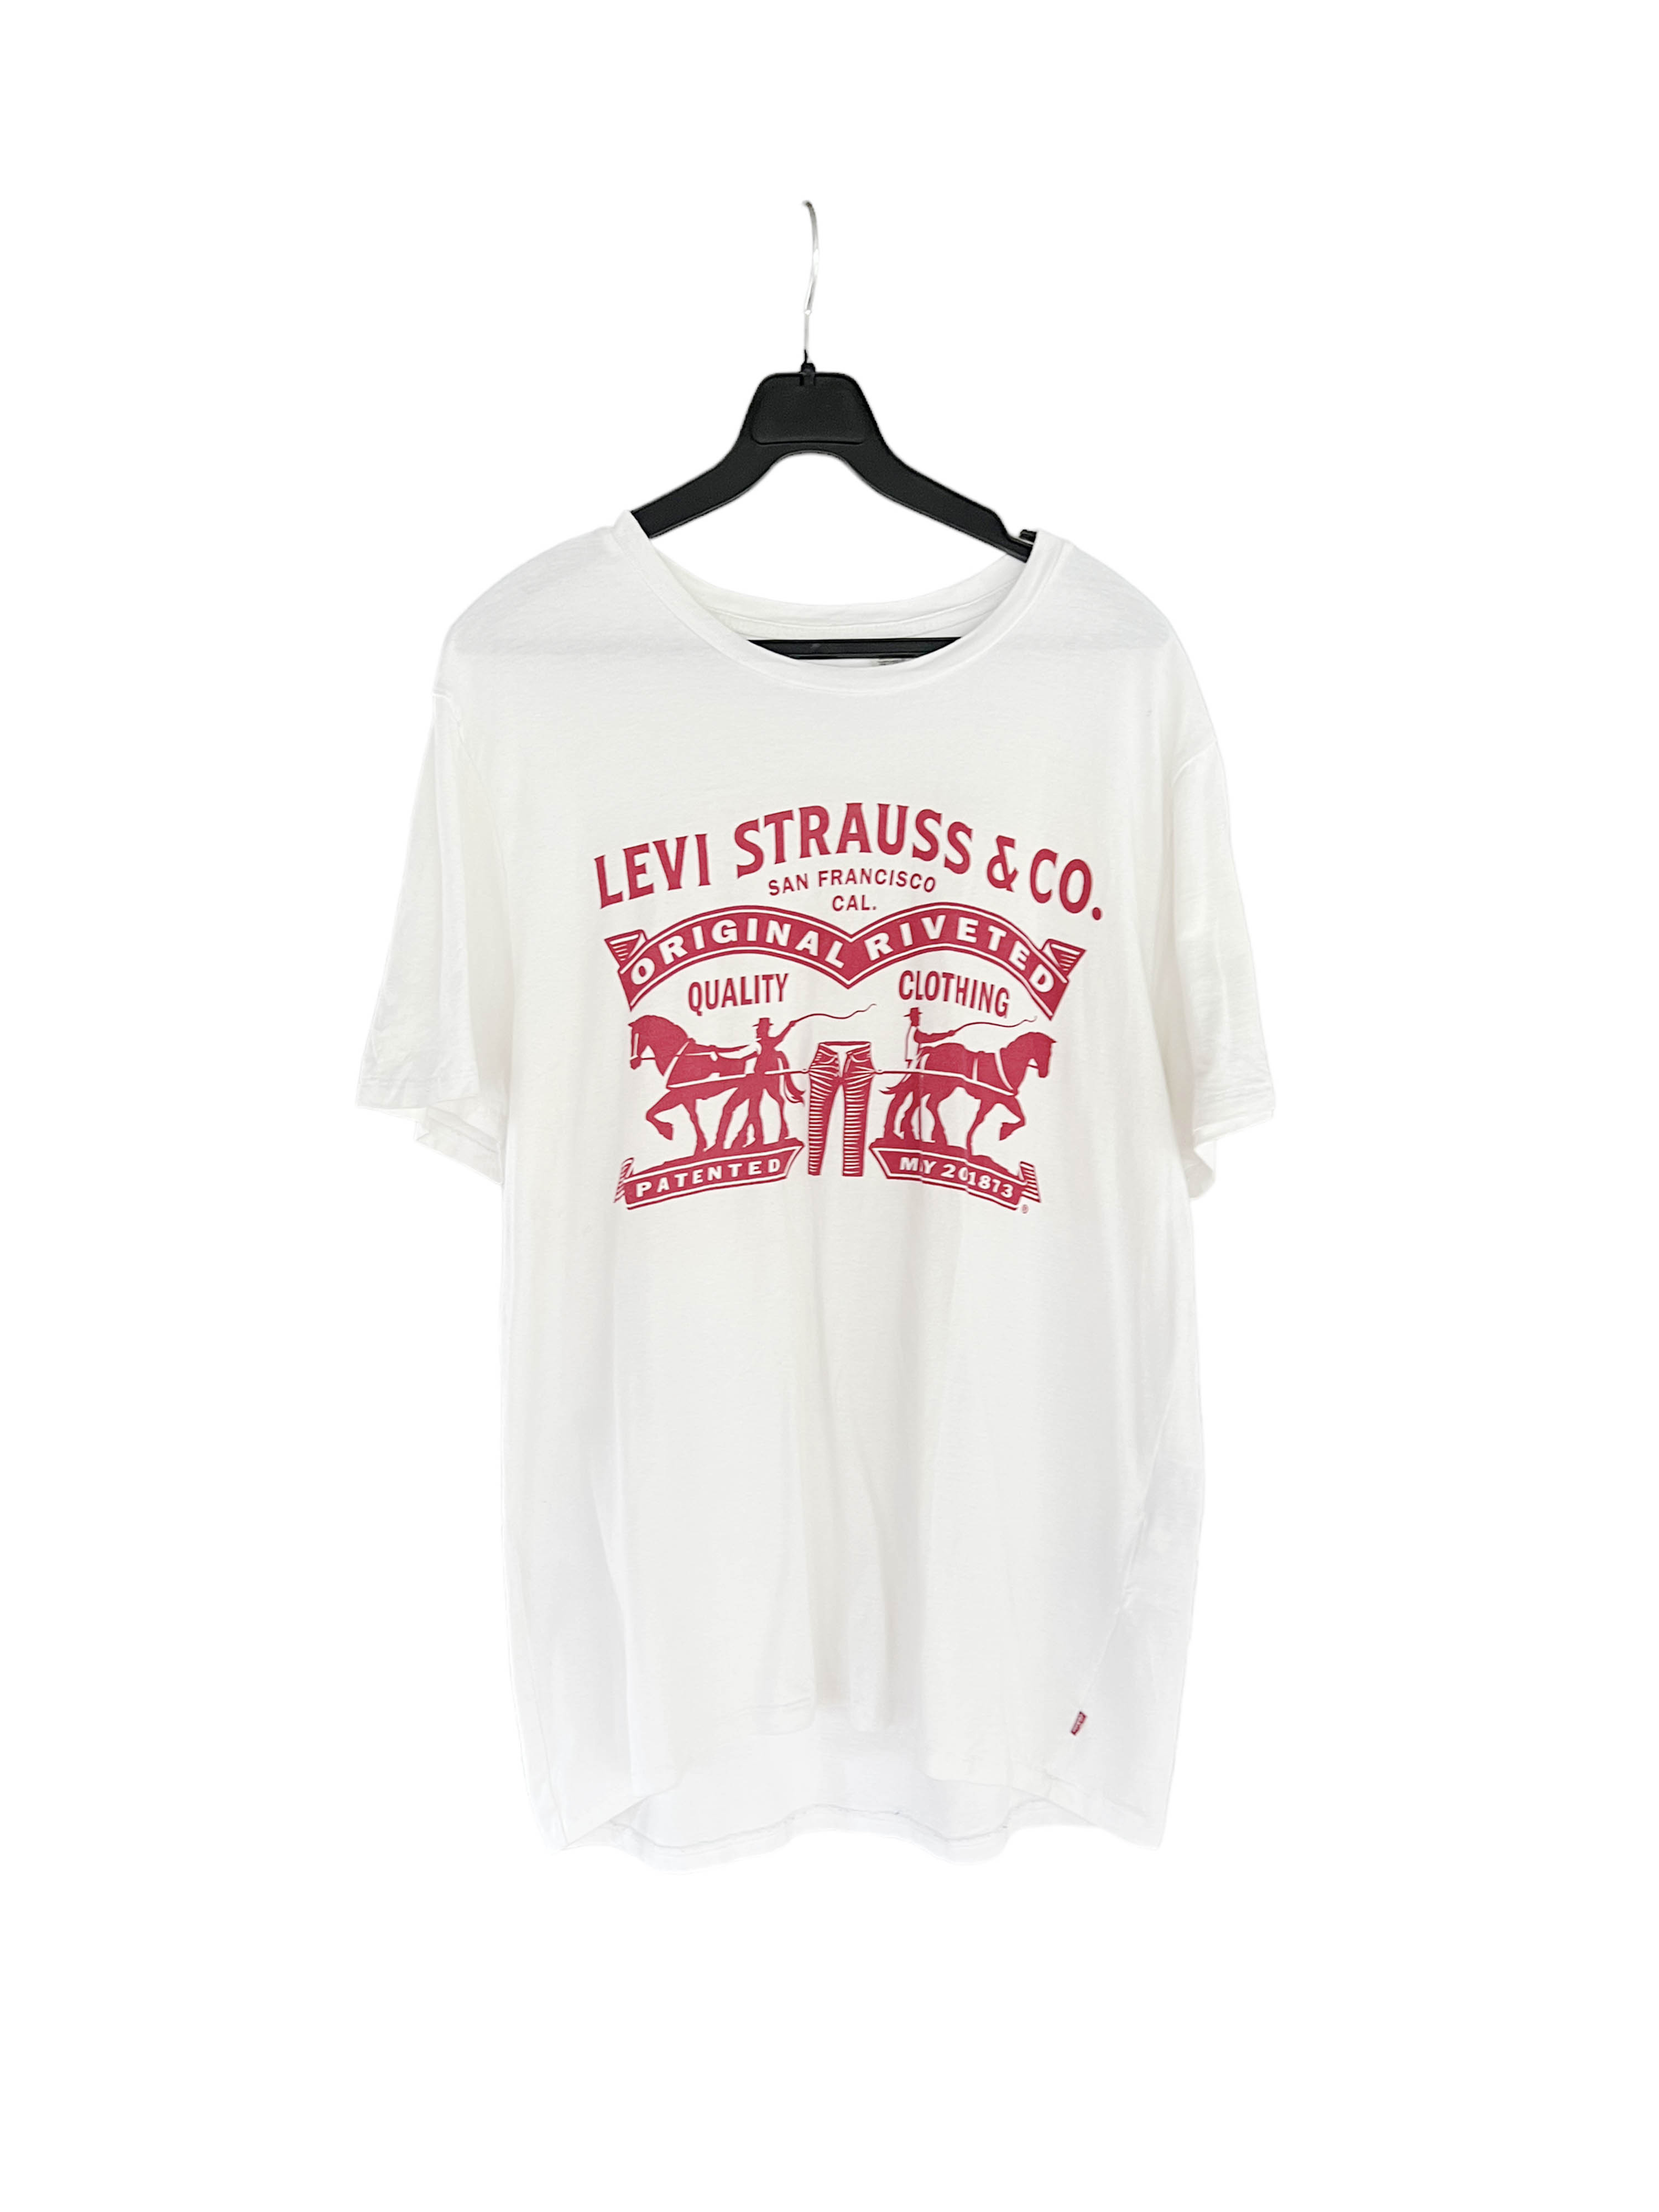 LEVIS logo t-shirts